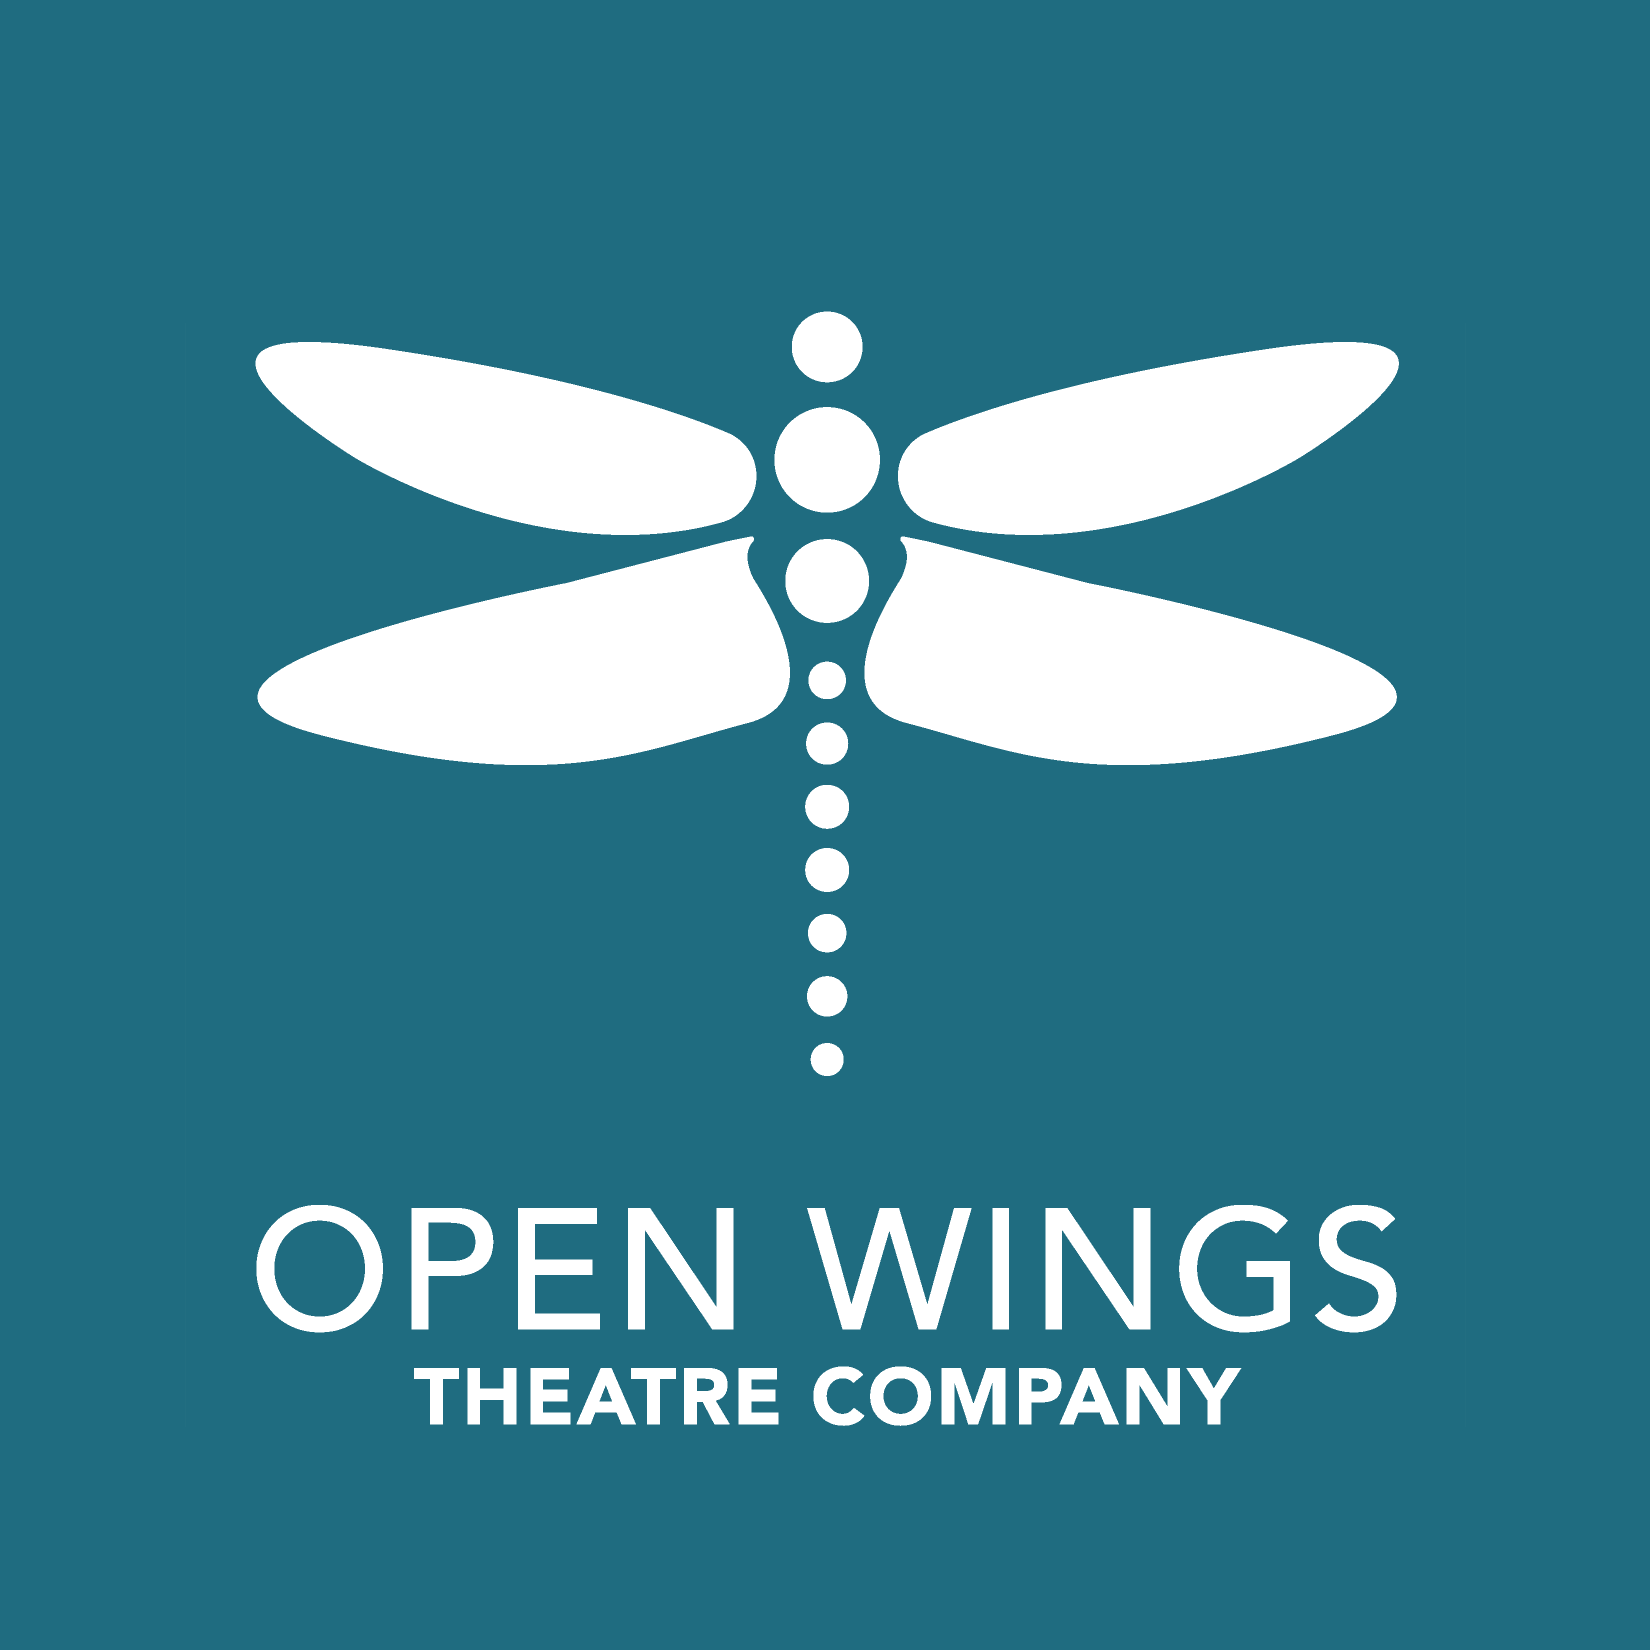 Open Wings Theatre Company logo